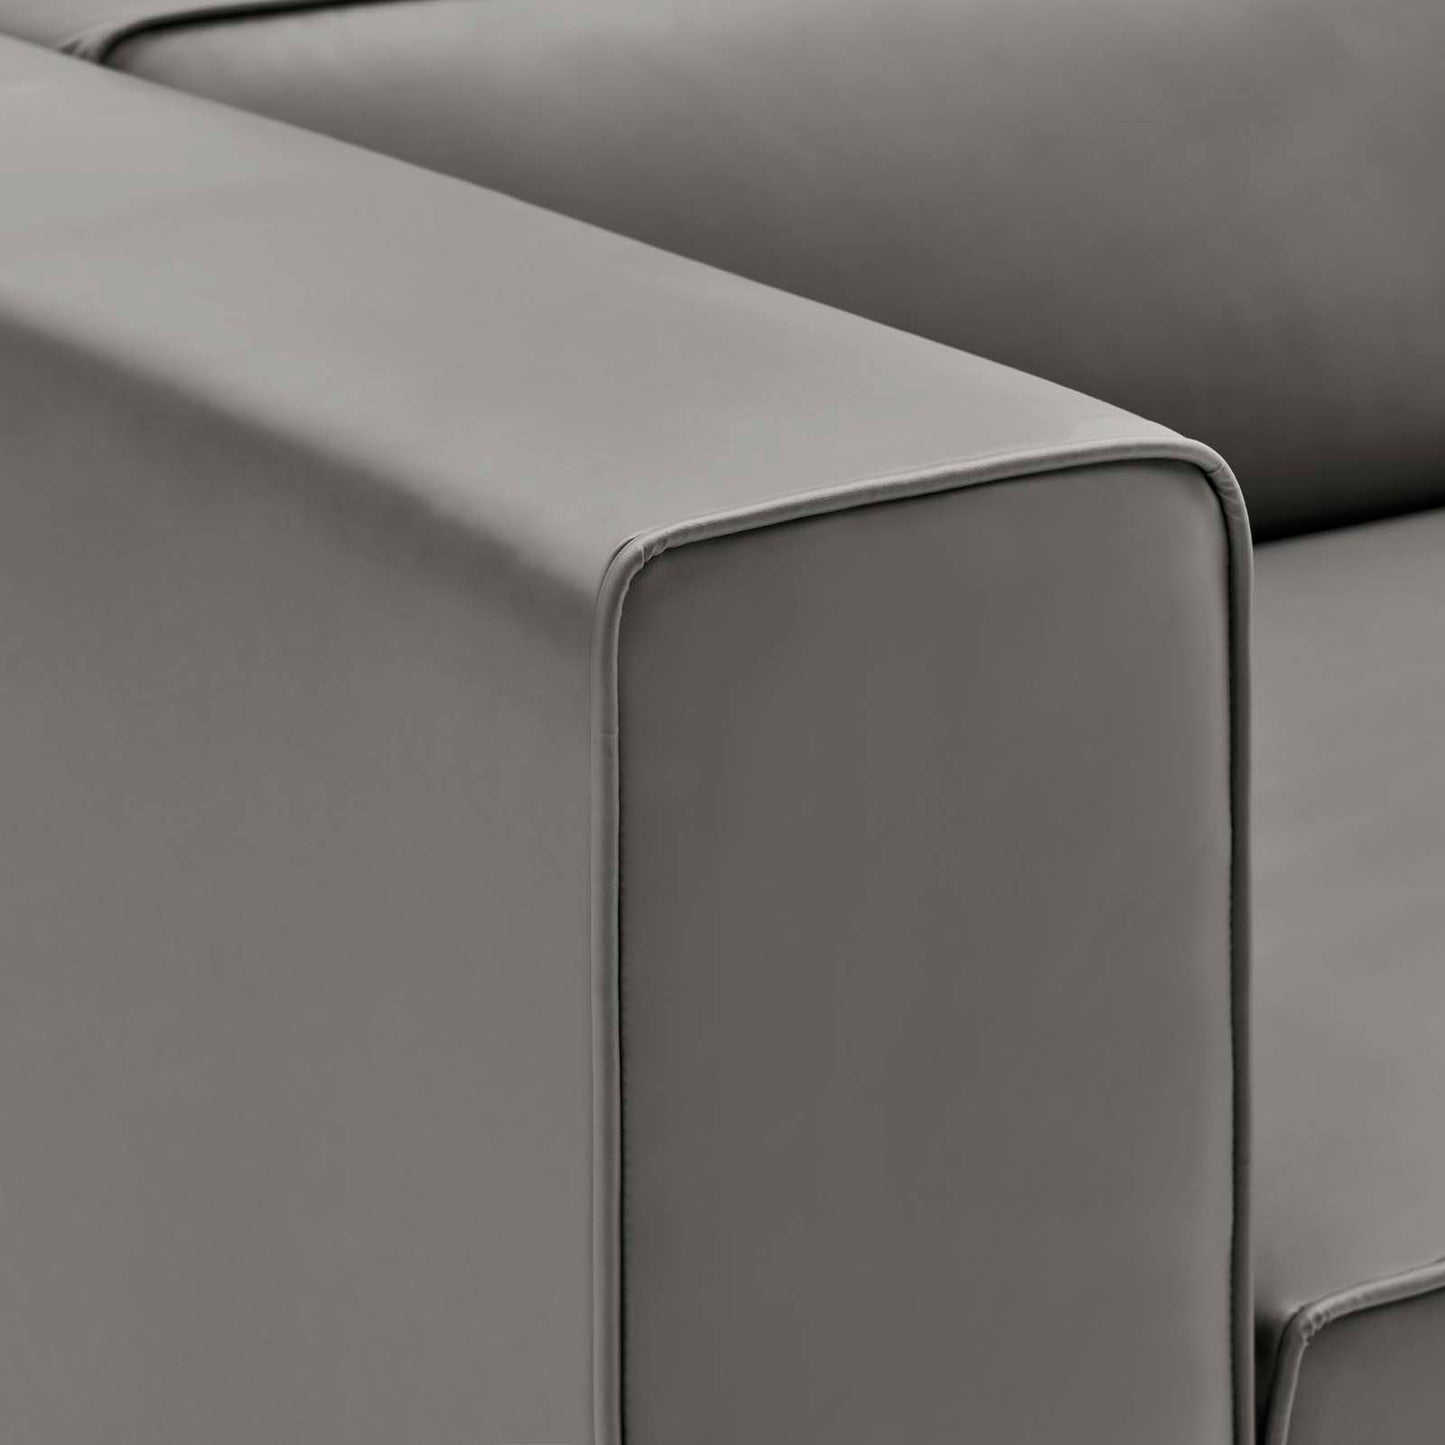 Mingle Vegan Leather Left-Arm Chair Gray EEI-4621-GRY